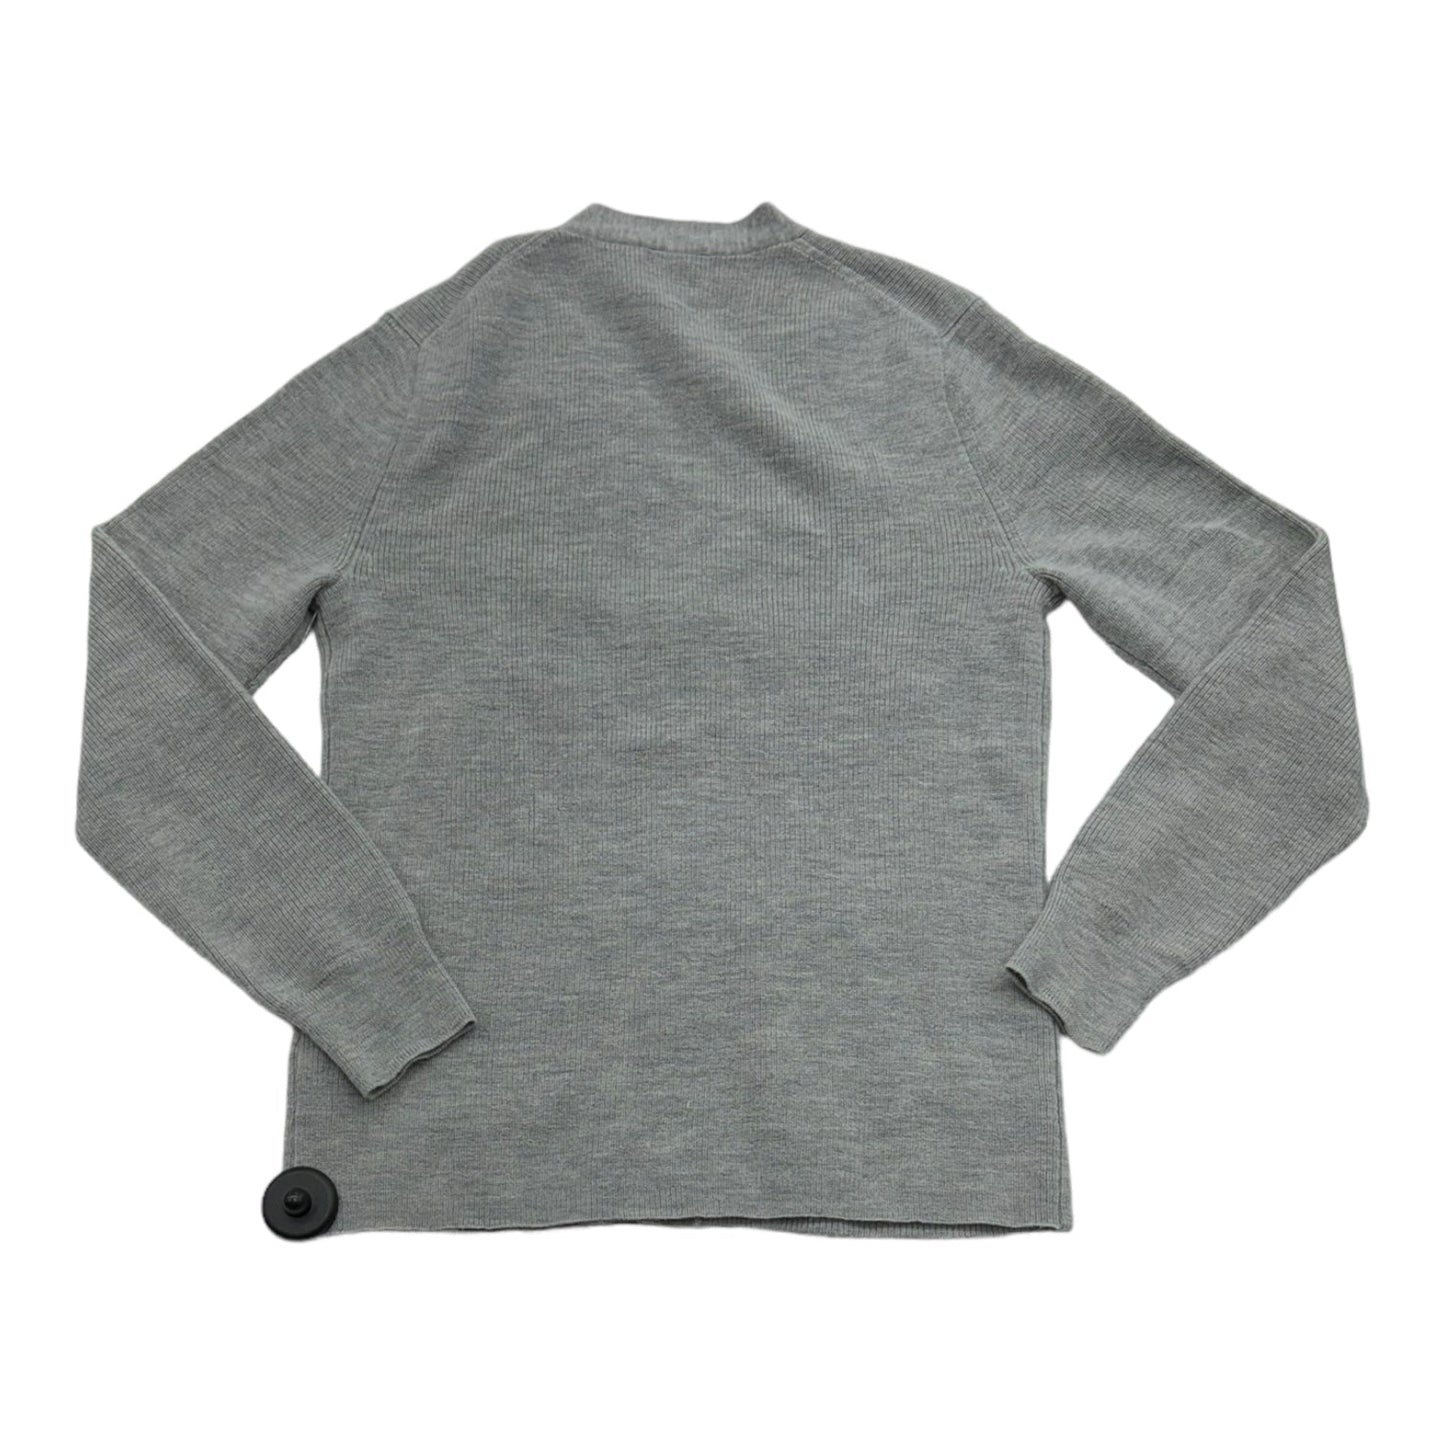 Sweater Cardigan By J. Crew  Size: S